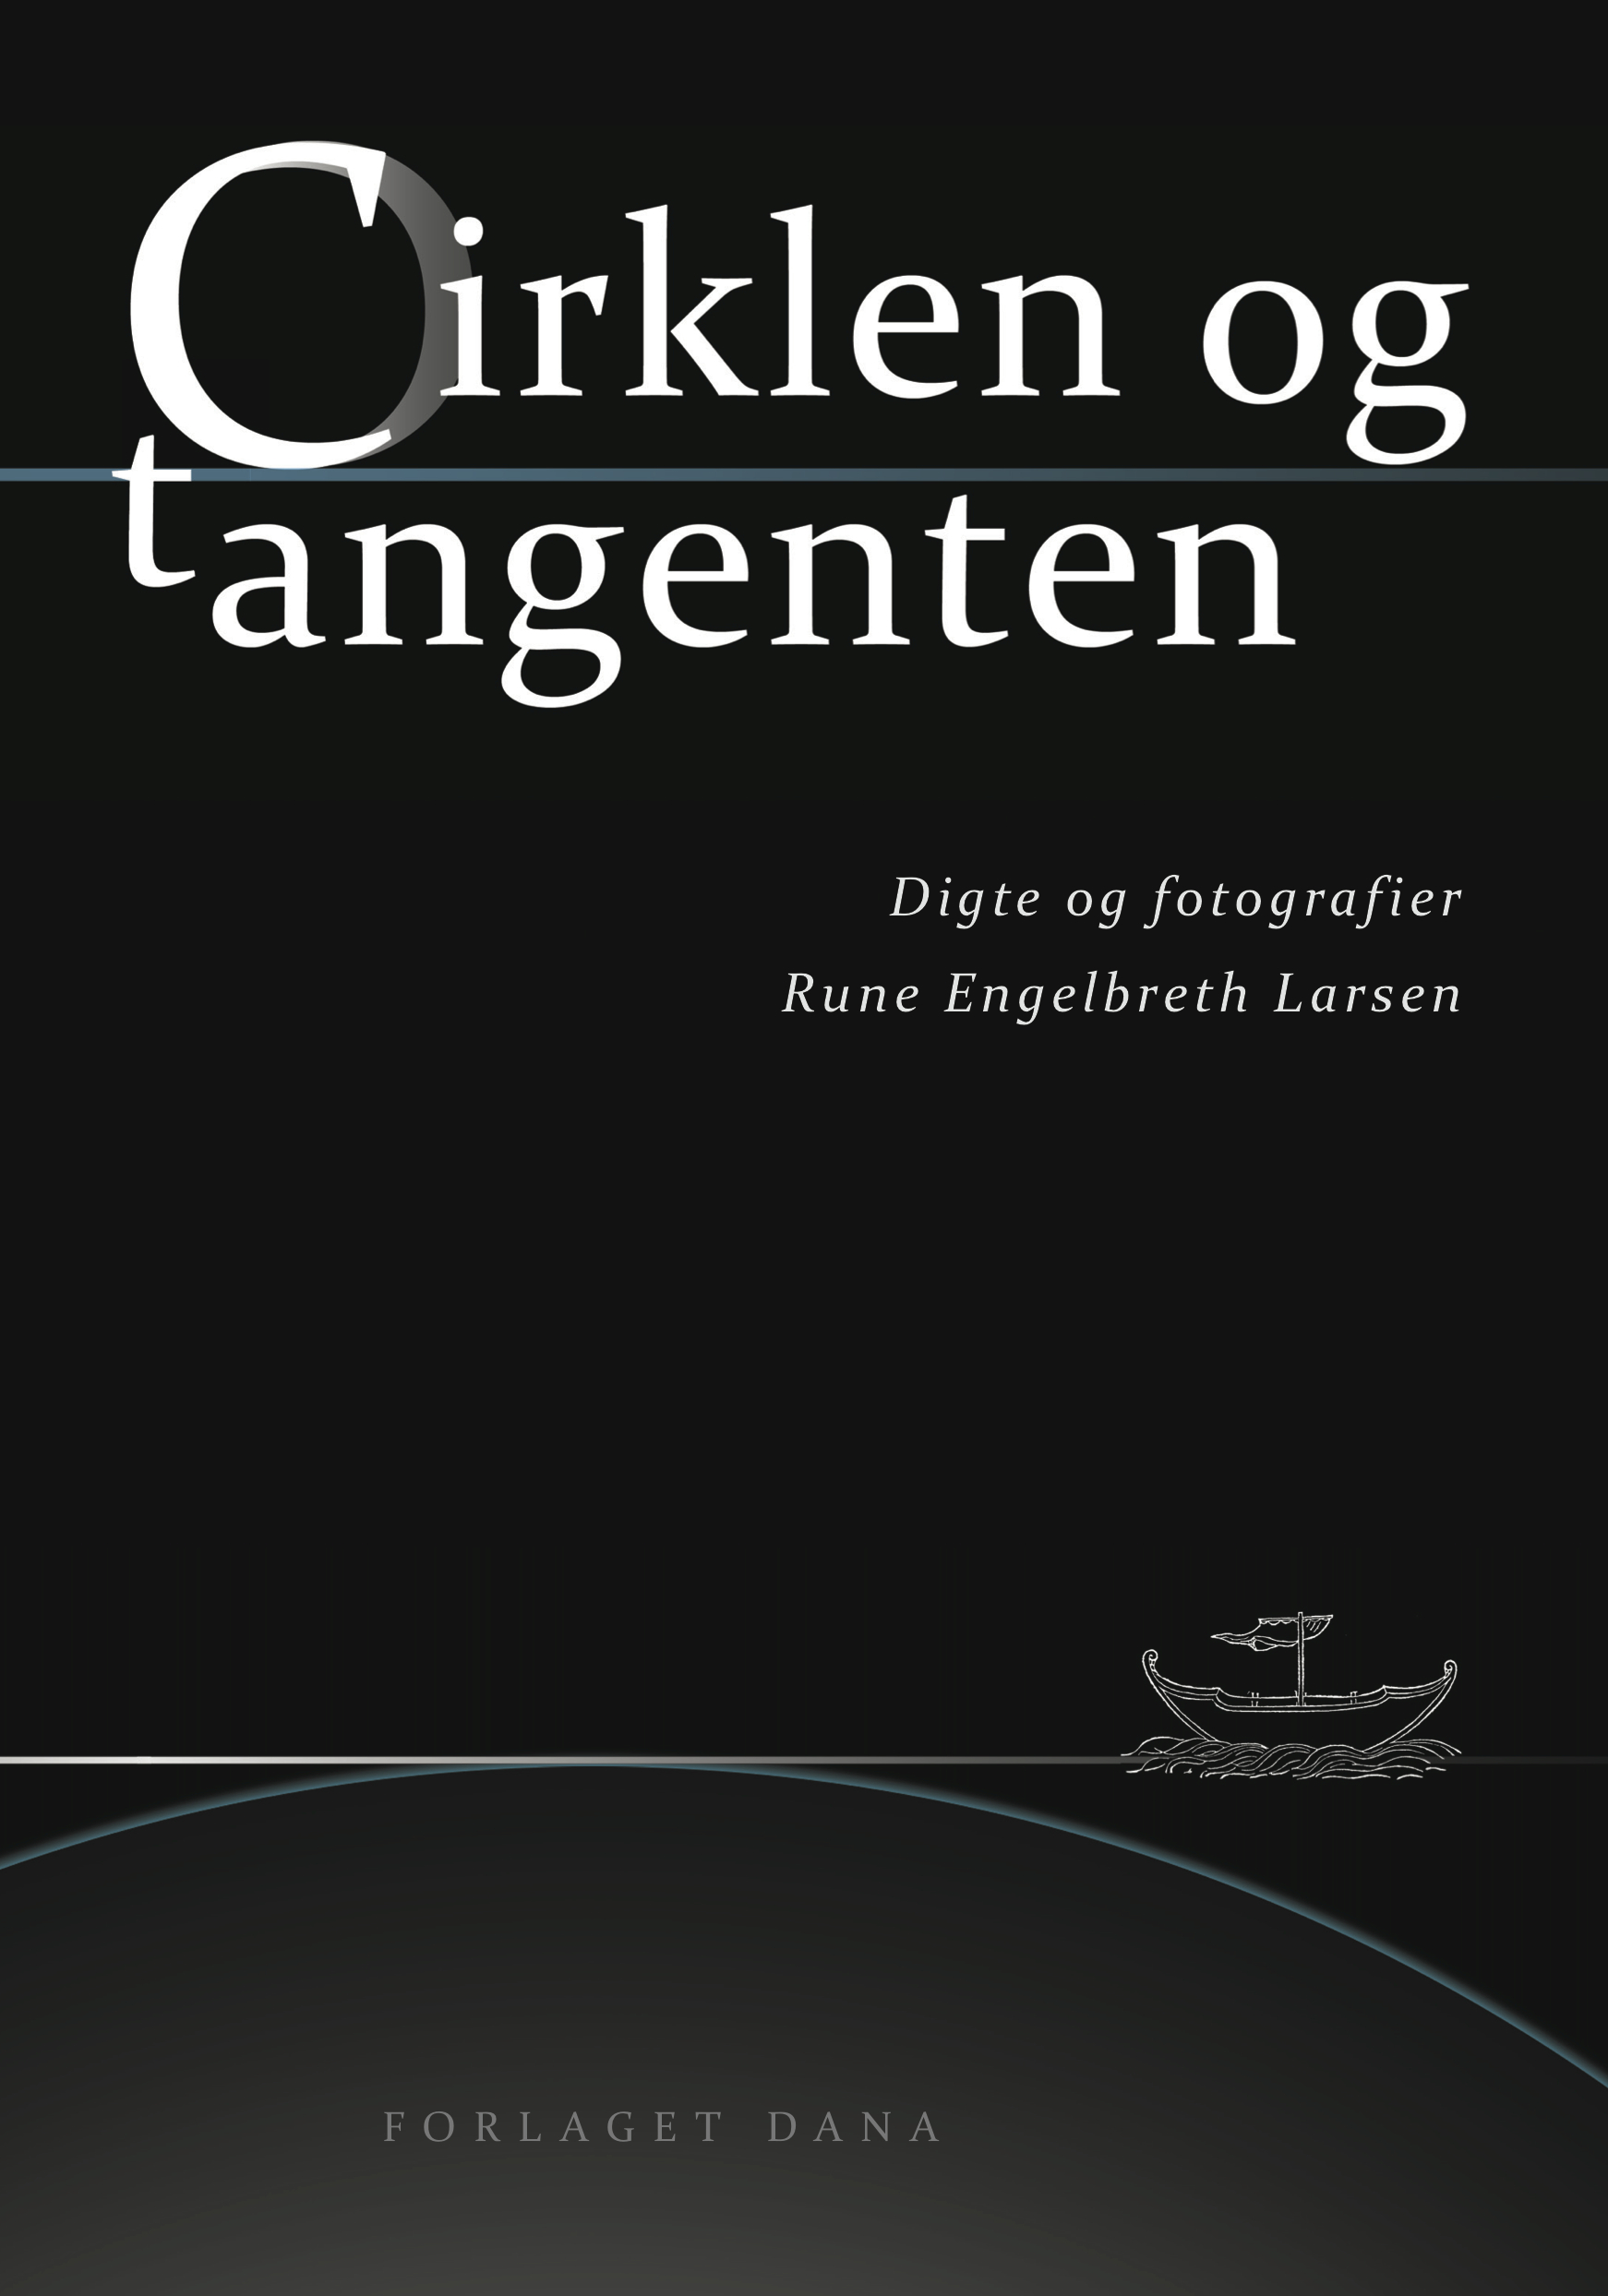 Forside til 'Cirklen og tangenten' af Rune Engelbreth Larsen